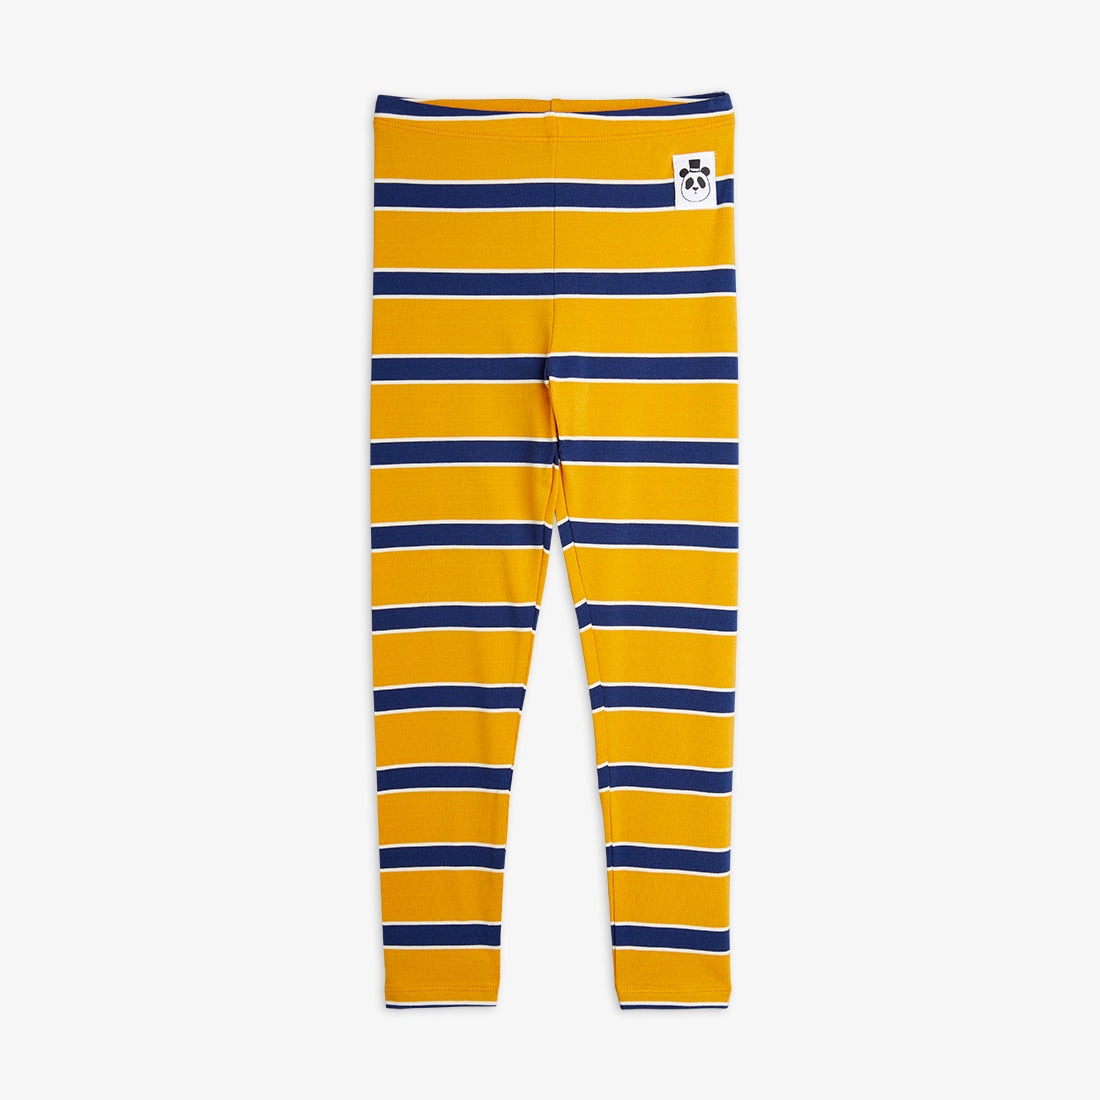 Mini leggins de rayas amarillas